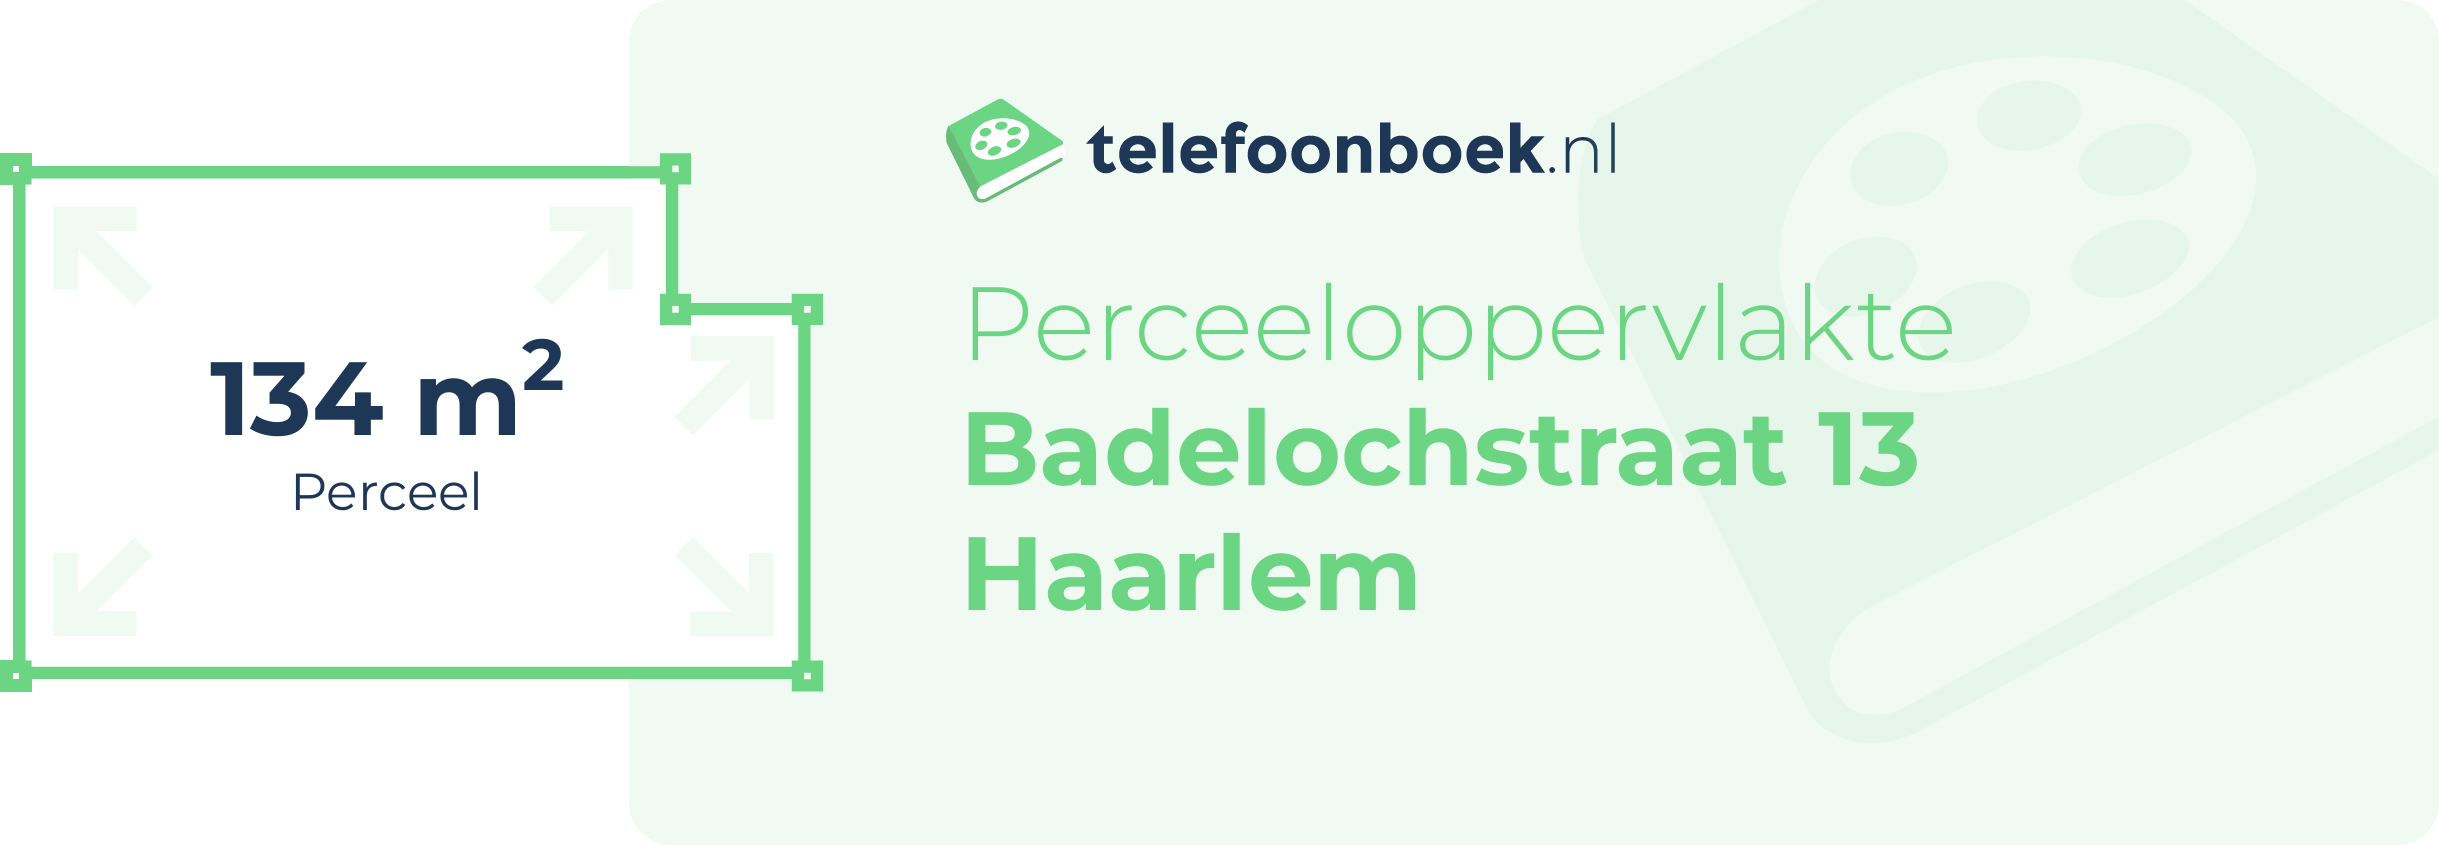 Perceeloppervlakte Badelochstraat 13 Haarlem